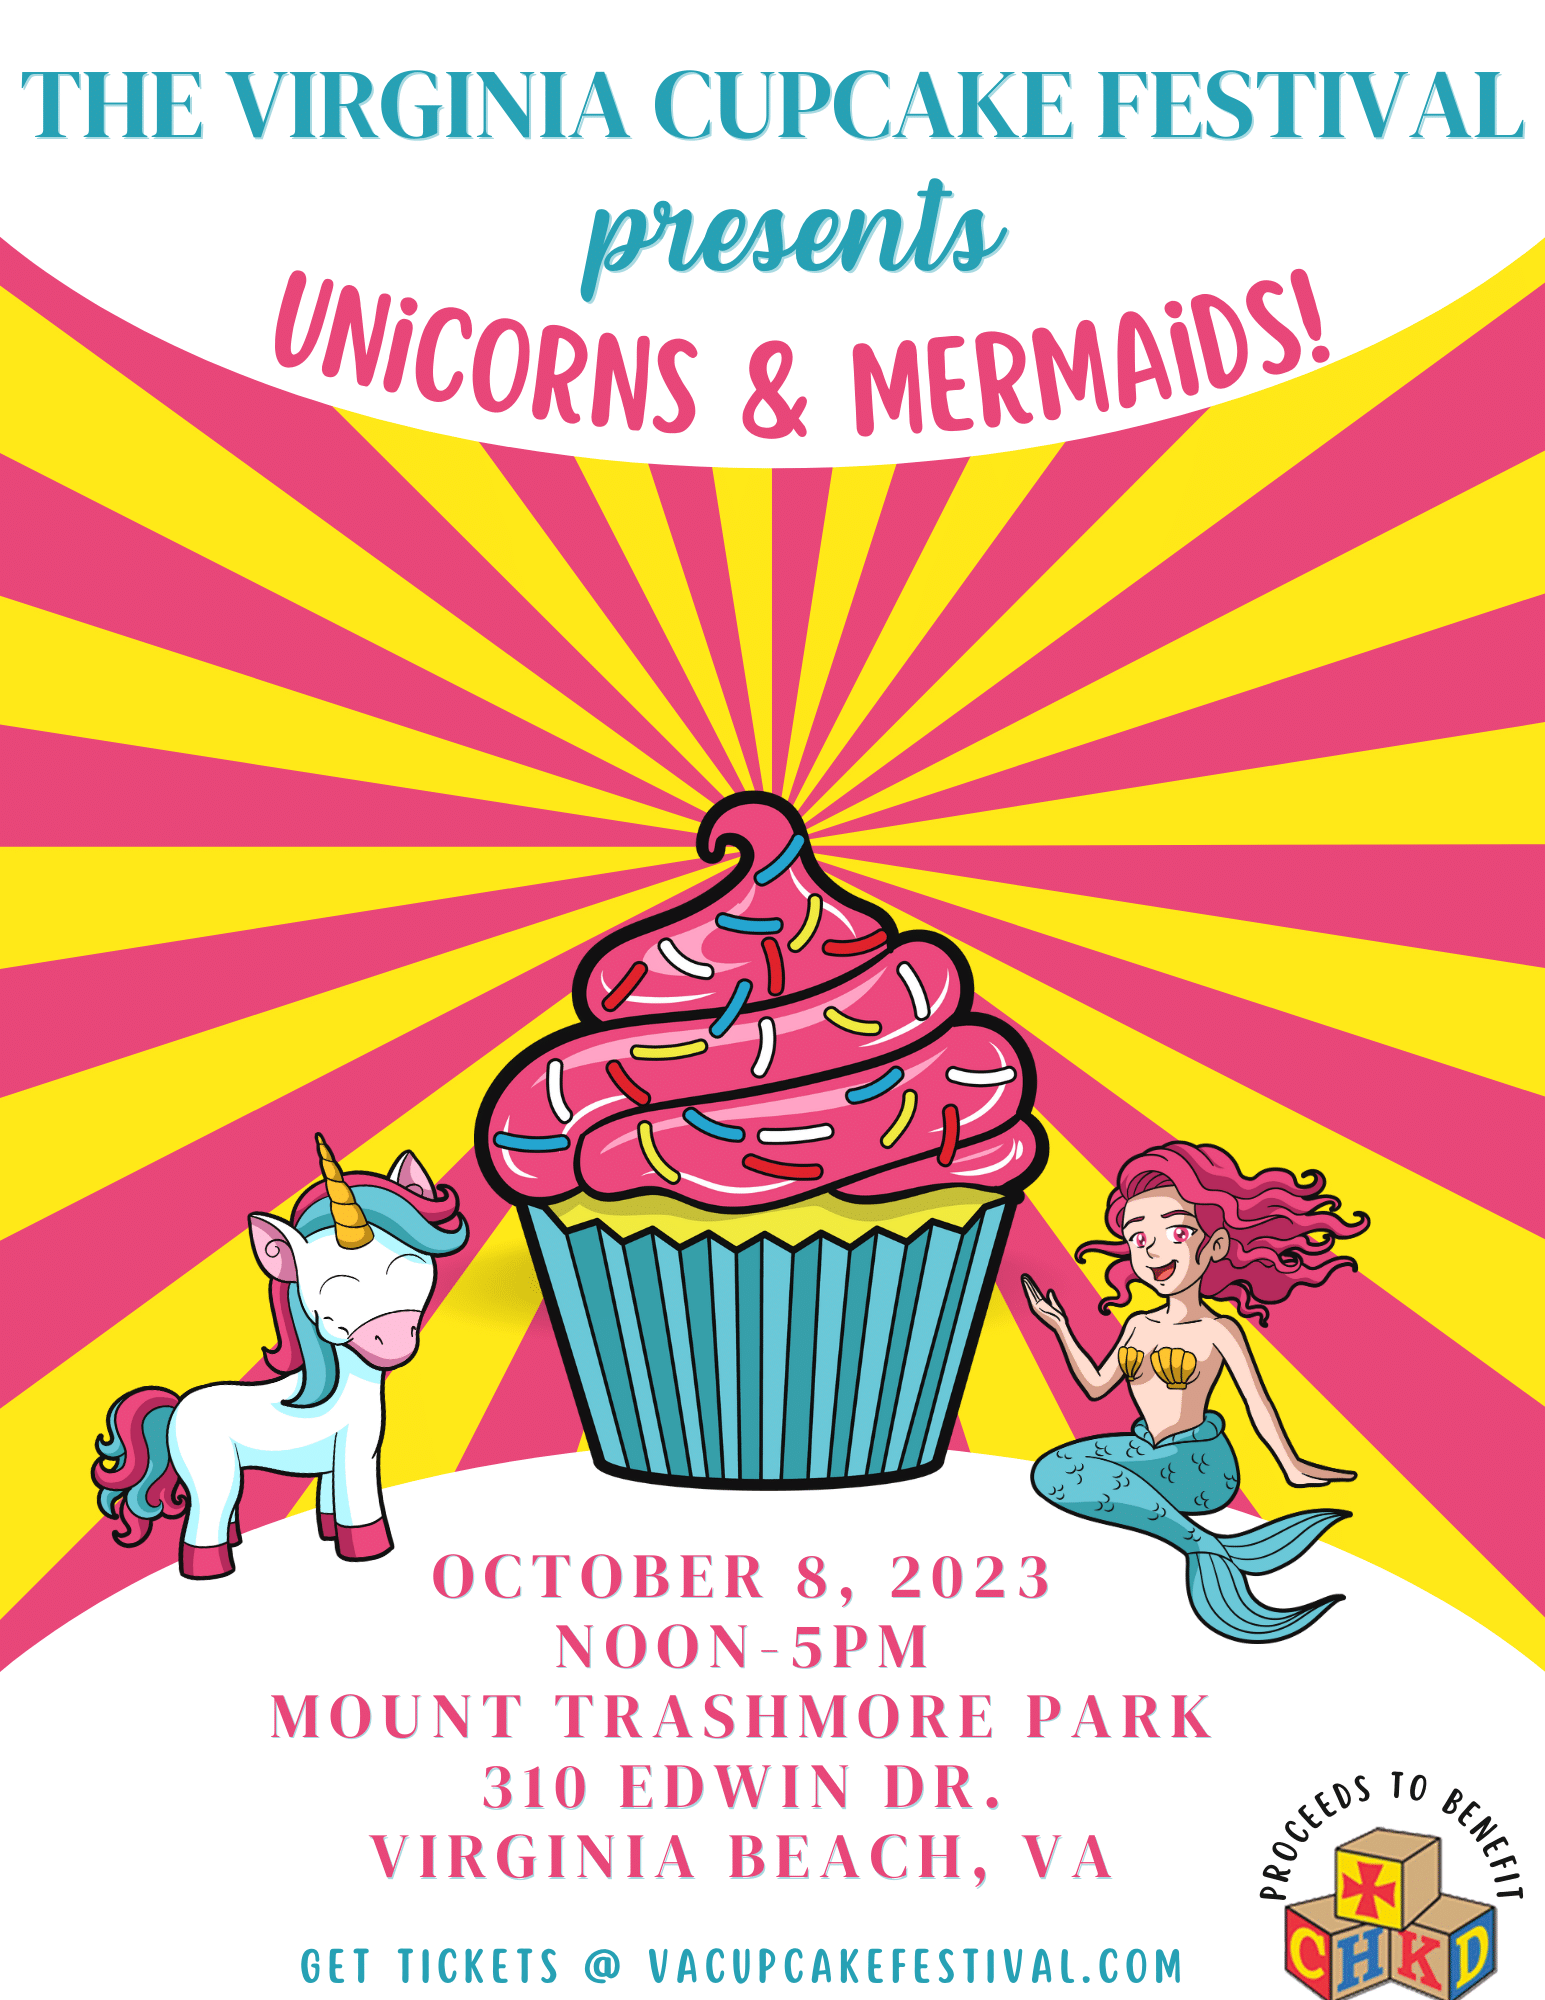 The Virginia Cupcake Festival presents Unicorns and Mermaids Event